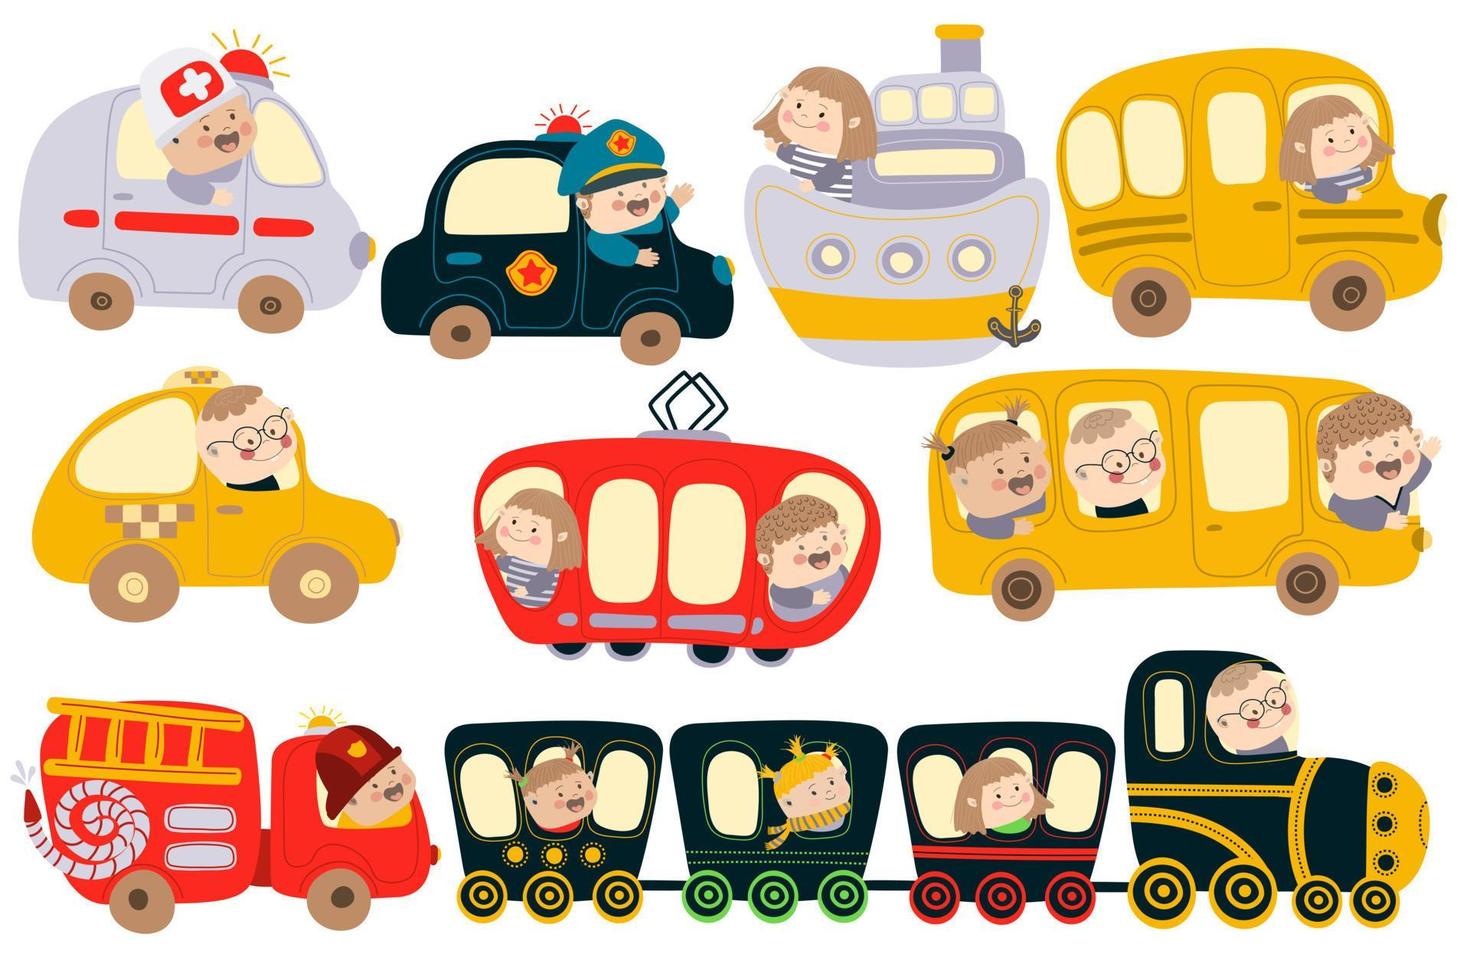 Happy children ride on public transport. Police car, fire truck, cab, streetcar, school bus, ambulance, train, ship. Vector illustration in cartoon style. For print, web design.